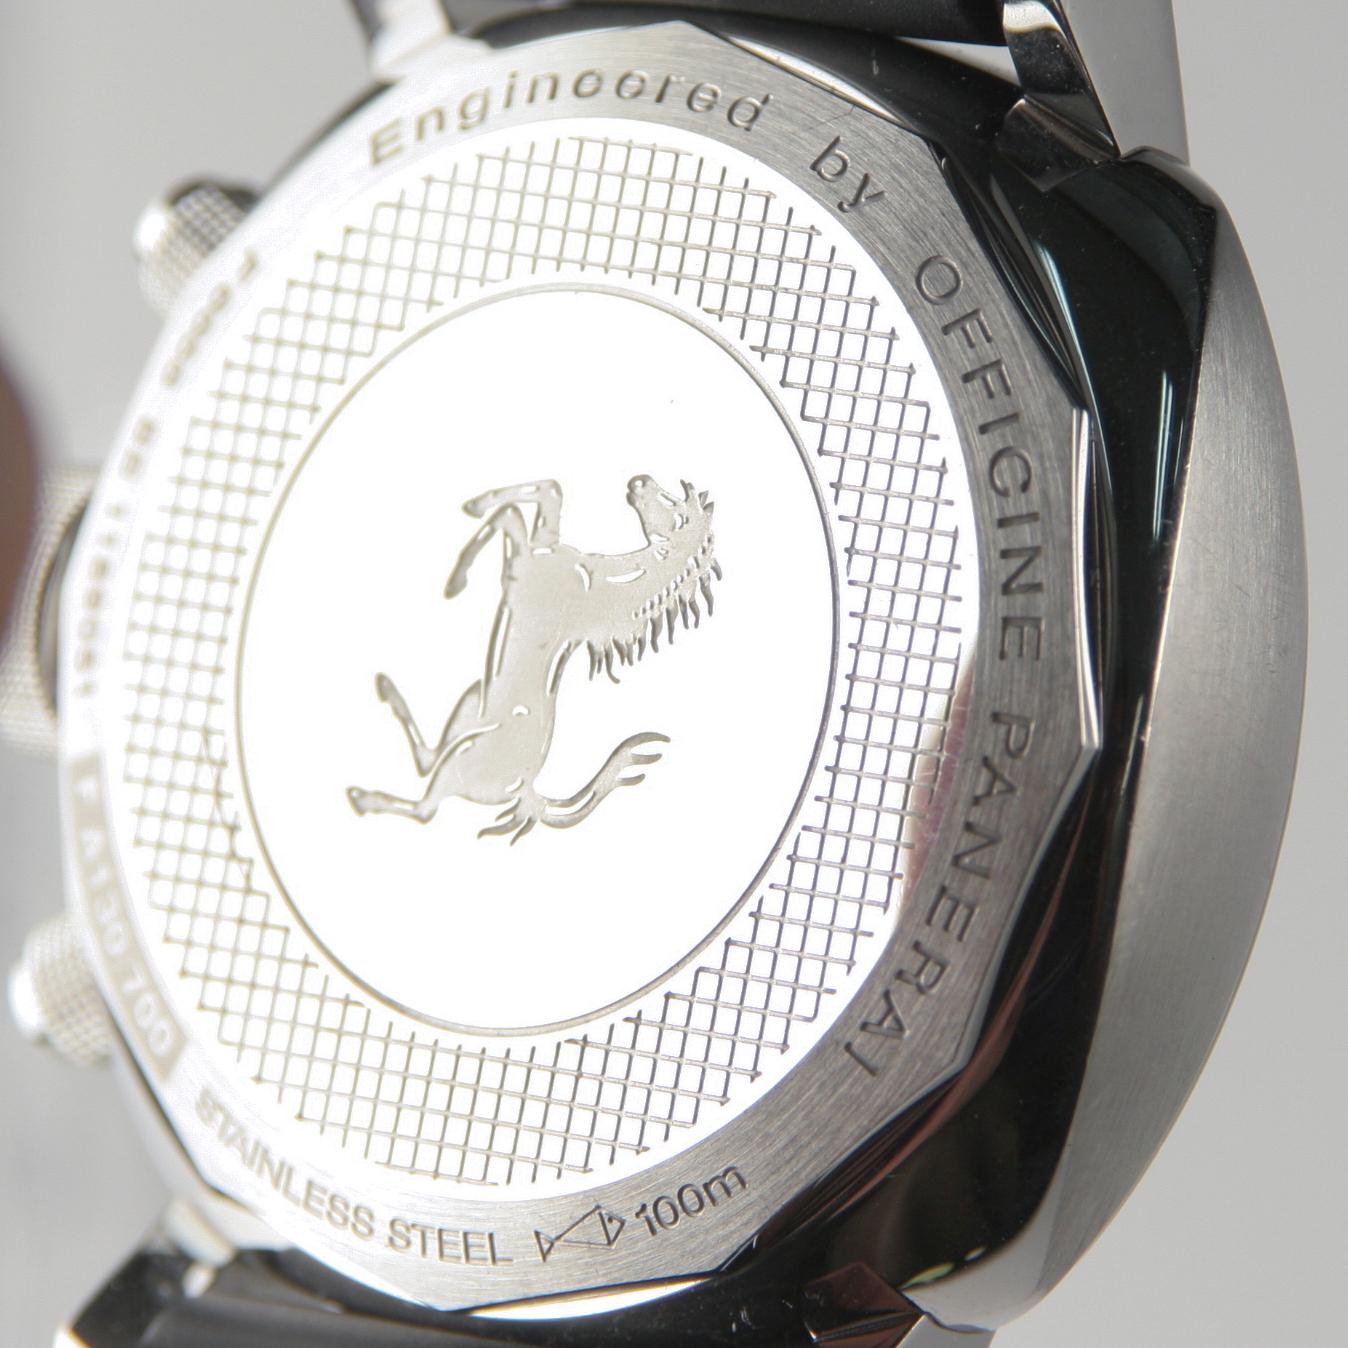 Panerai Ferrari Granturismo Chronograph Men's Automatic Watch Model FER00011 3